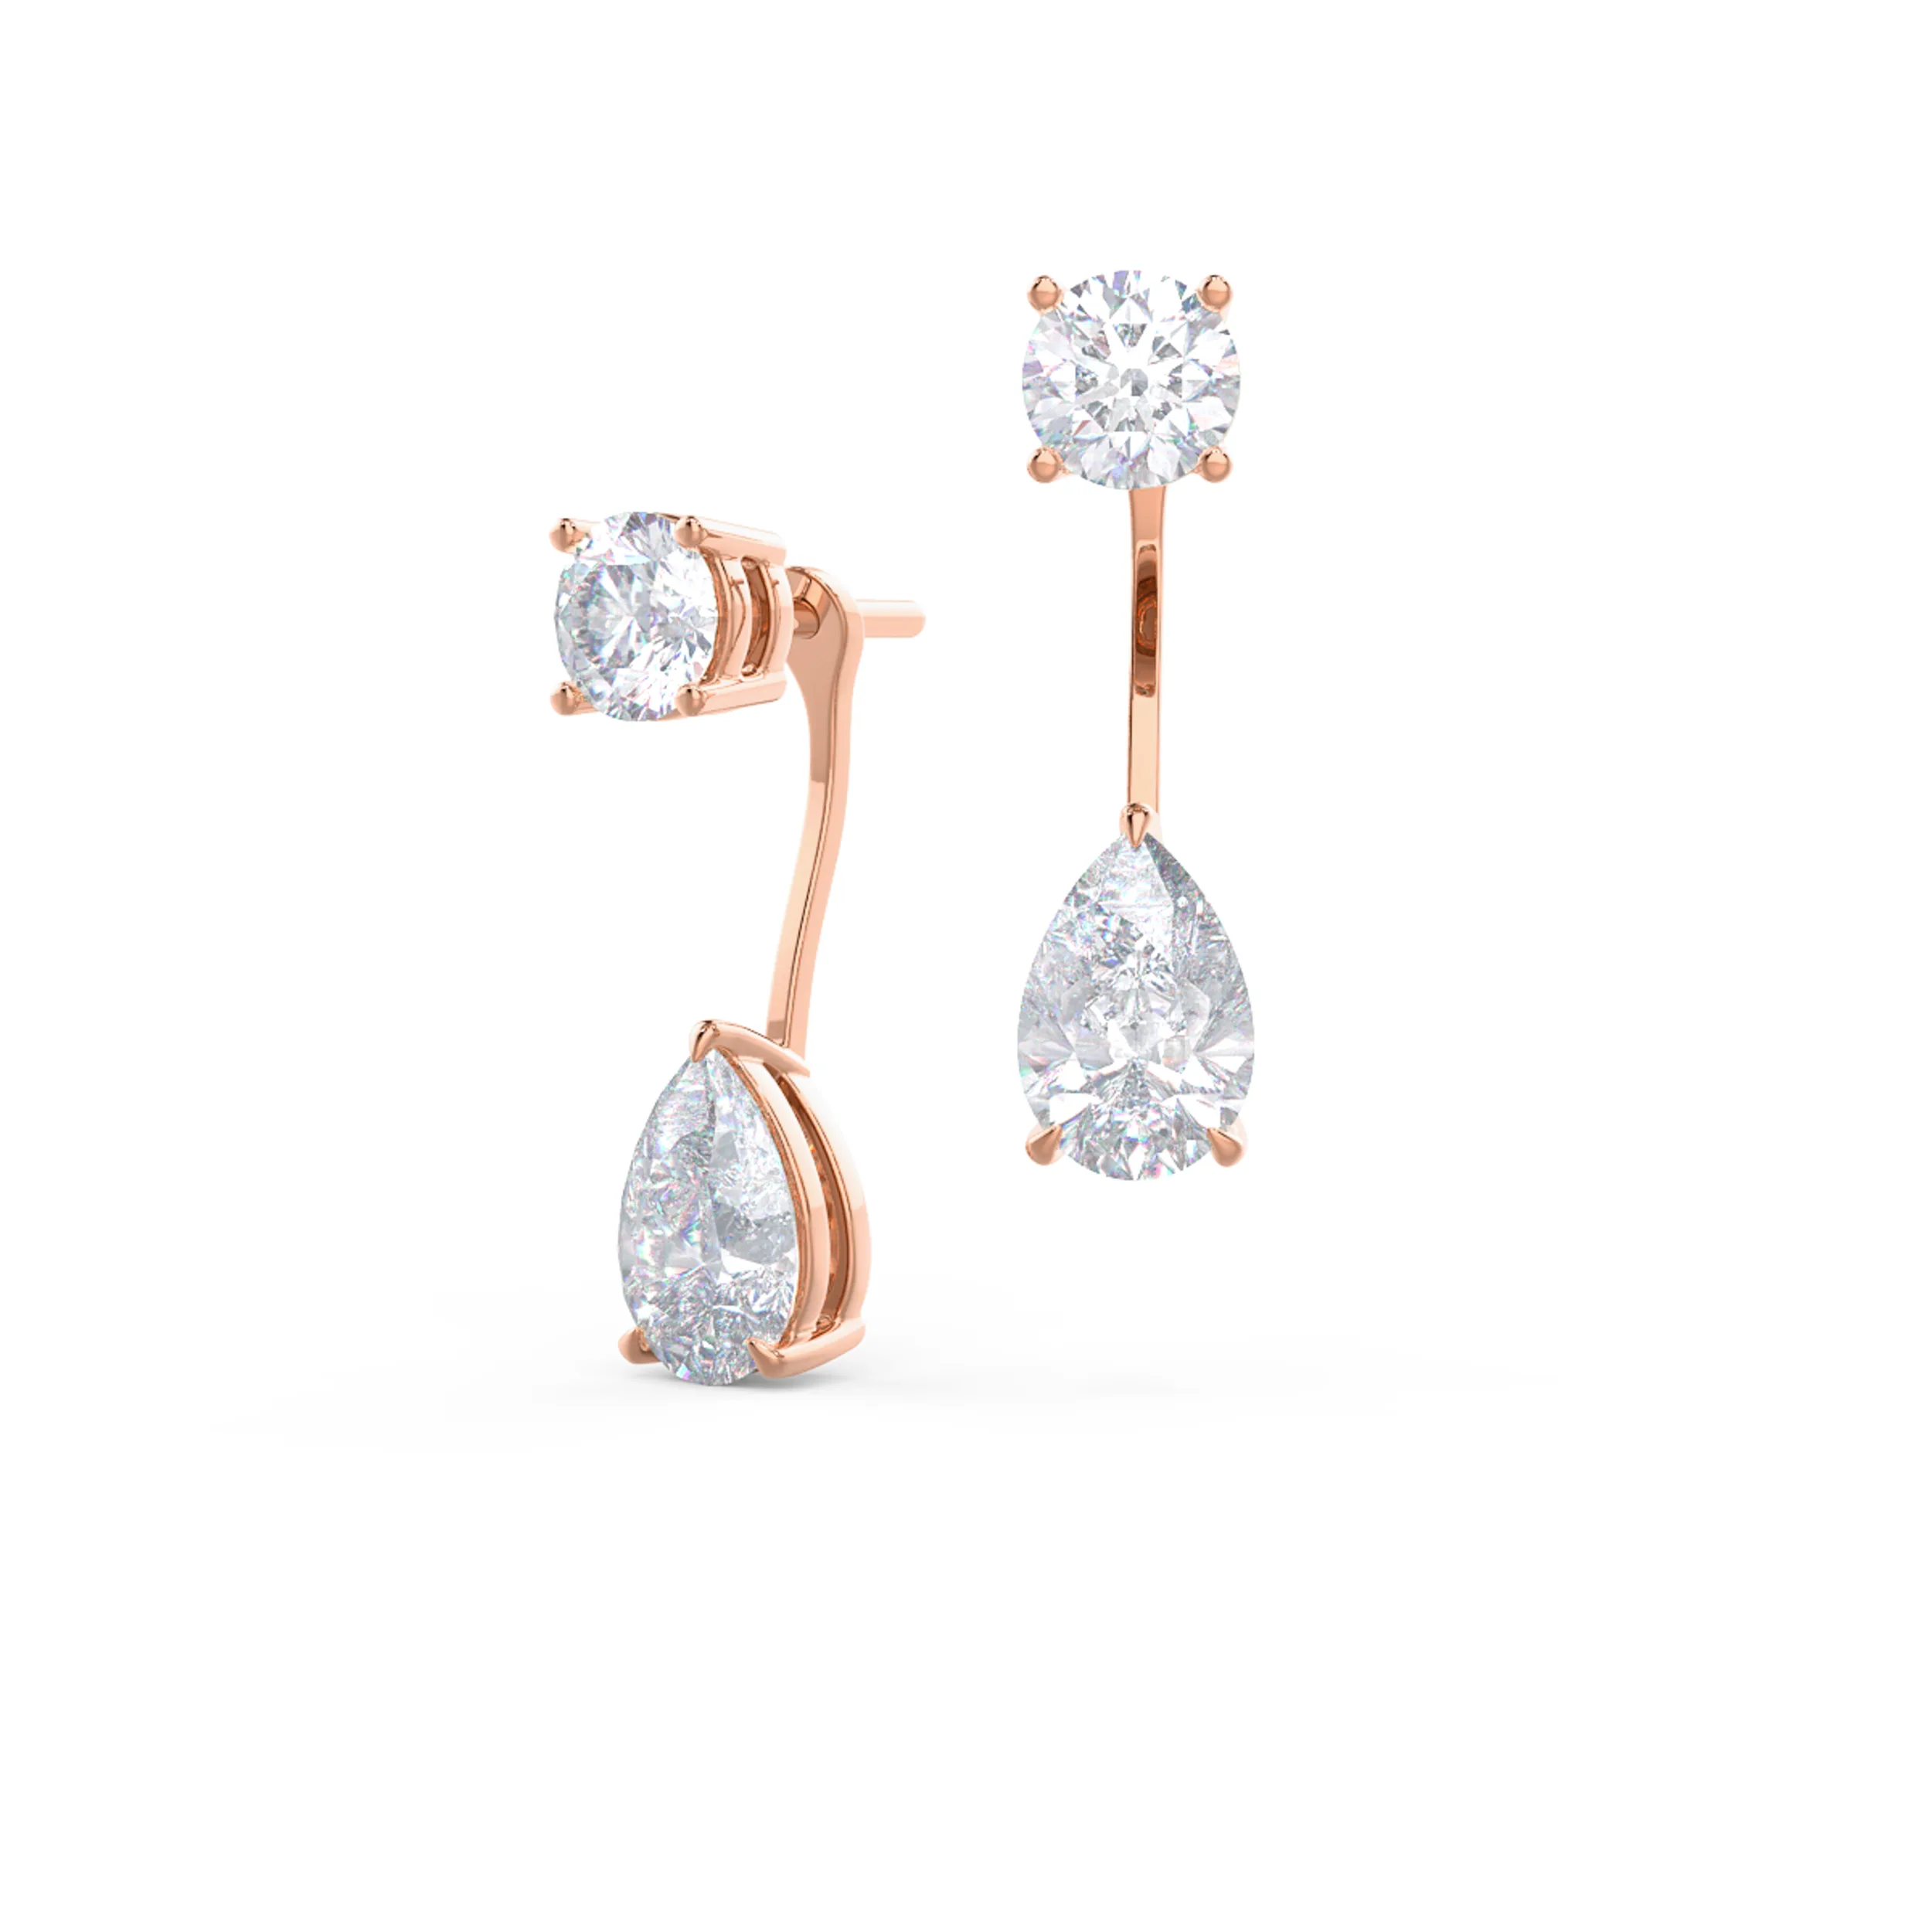 Lab Created Diamonds set in Rose Gold Pear Cut Diamond Drop Earring Jackets (Main View)